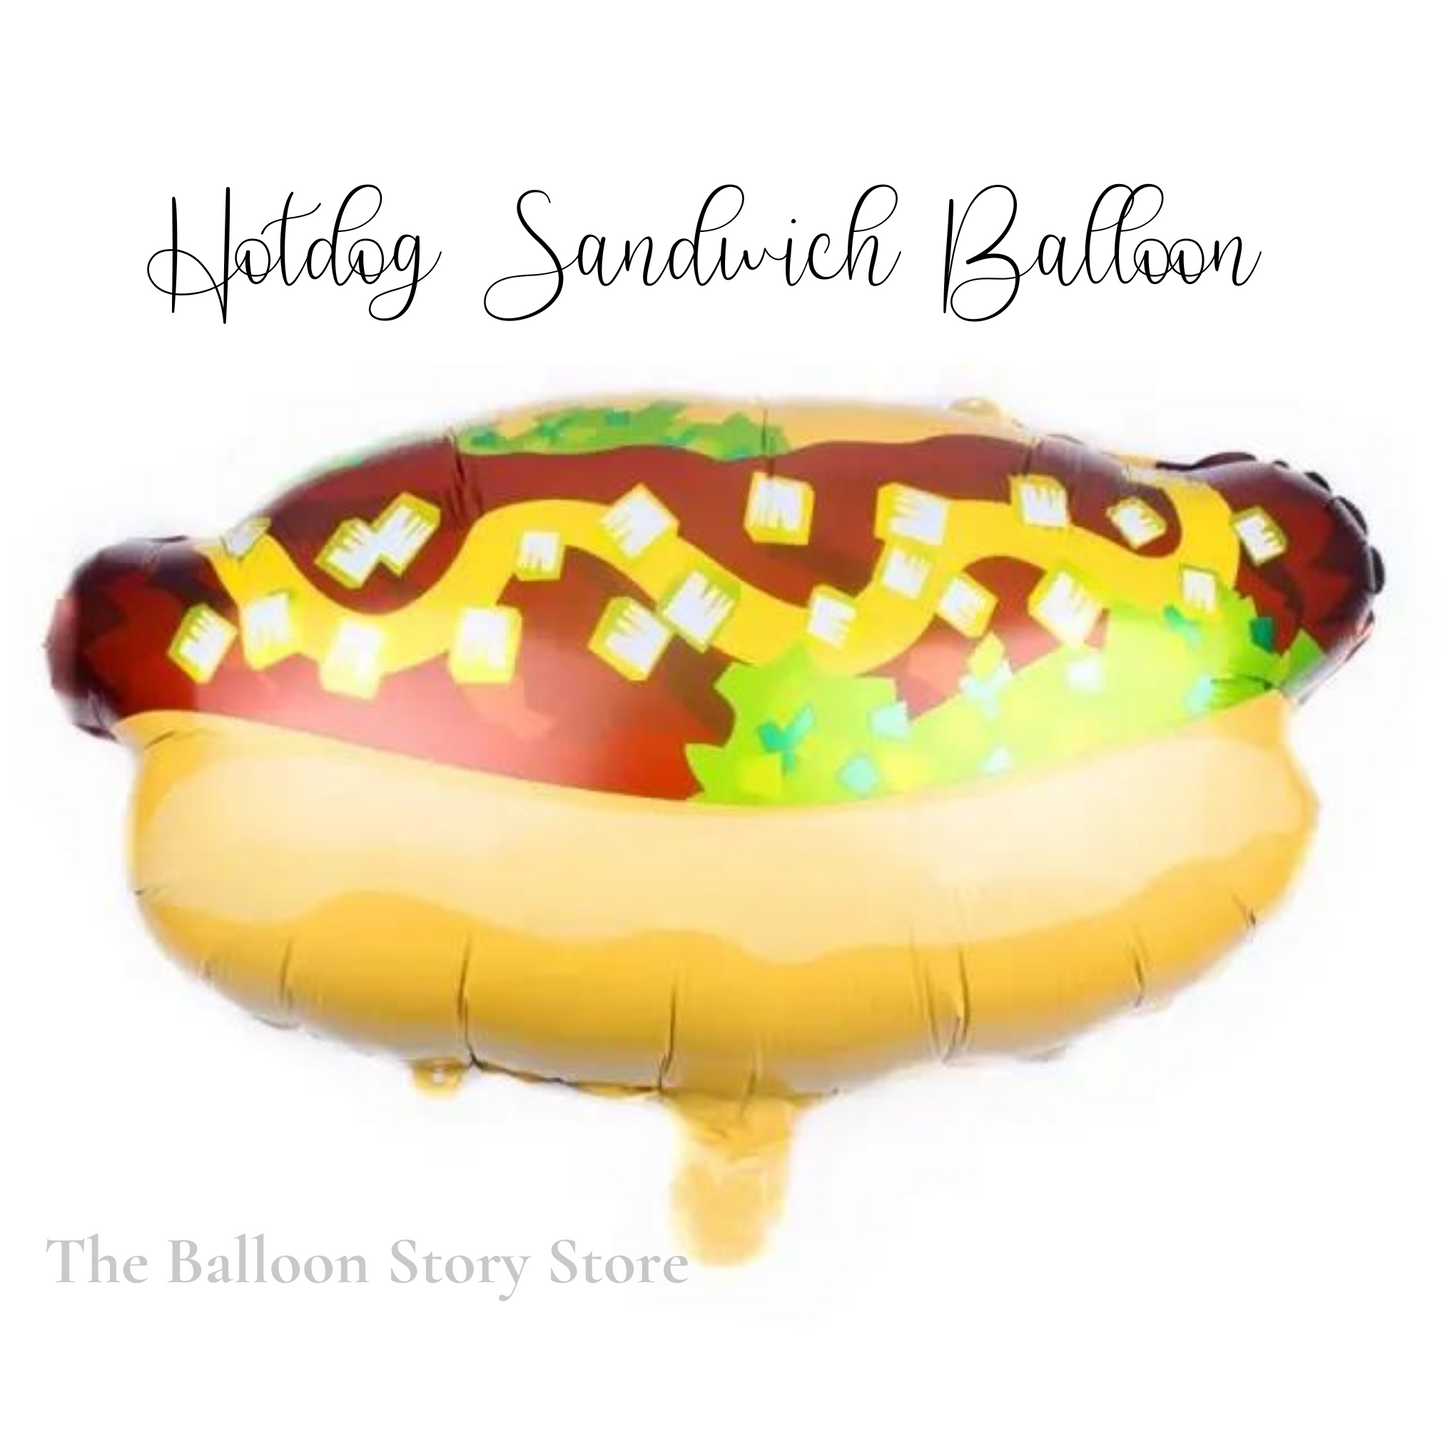 Pizza Balloon Hotdog Sandwich Balloon Popcorn Balloon and Cola Balloon